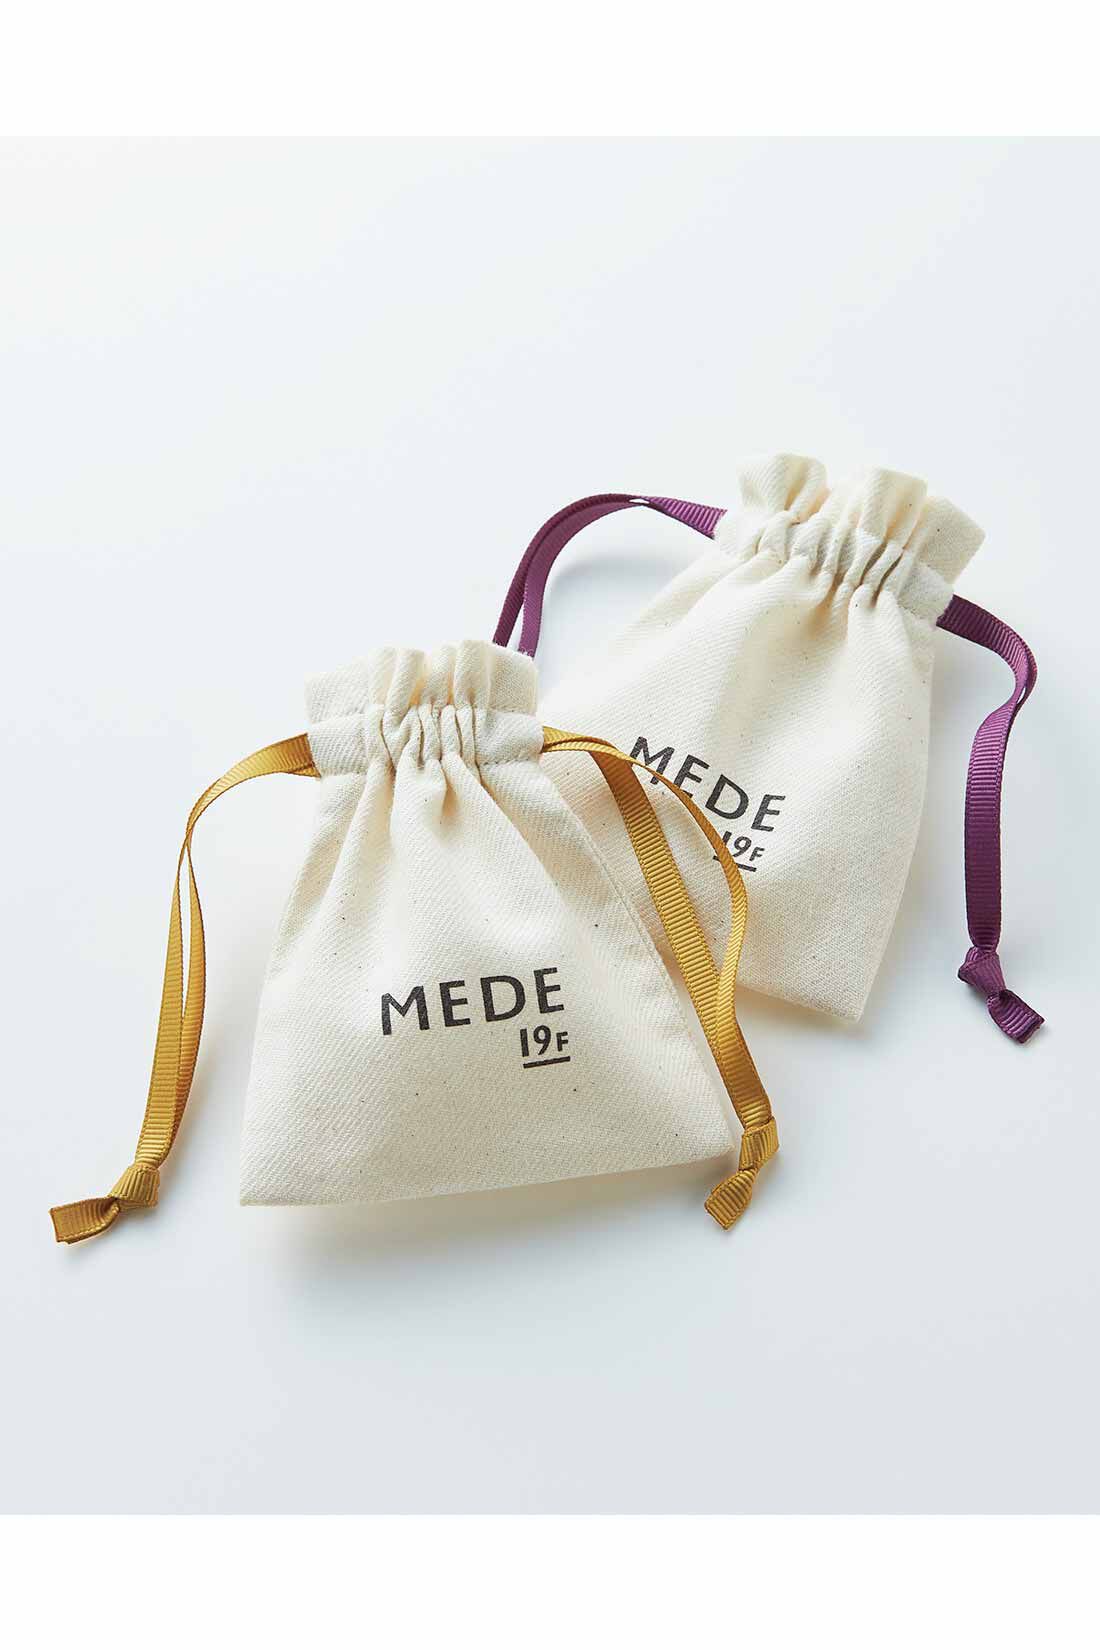 MEDE19F|YPAC for MEDE19F　フランス製陶器ボタンイヤリング type.24|MEDE19Fオリジナルきんちゃくに入れてお届けします。